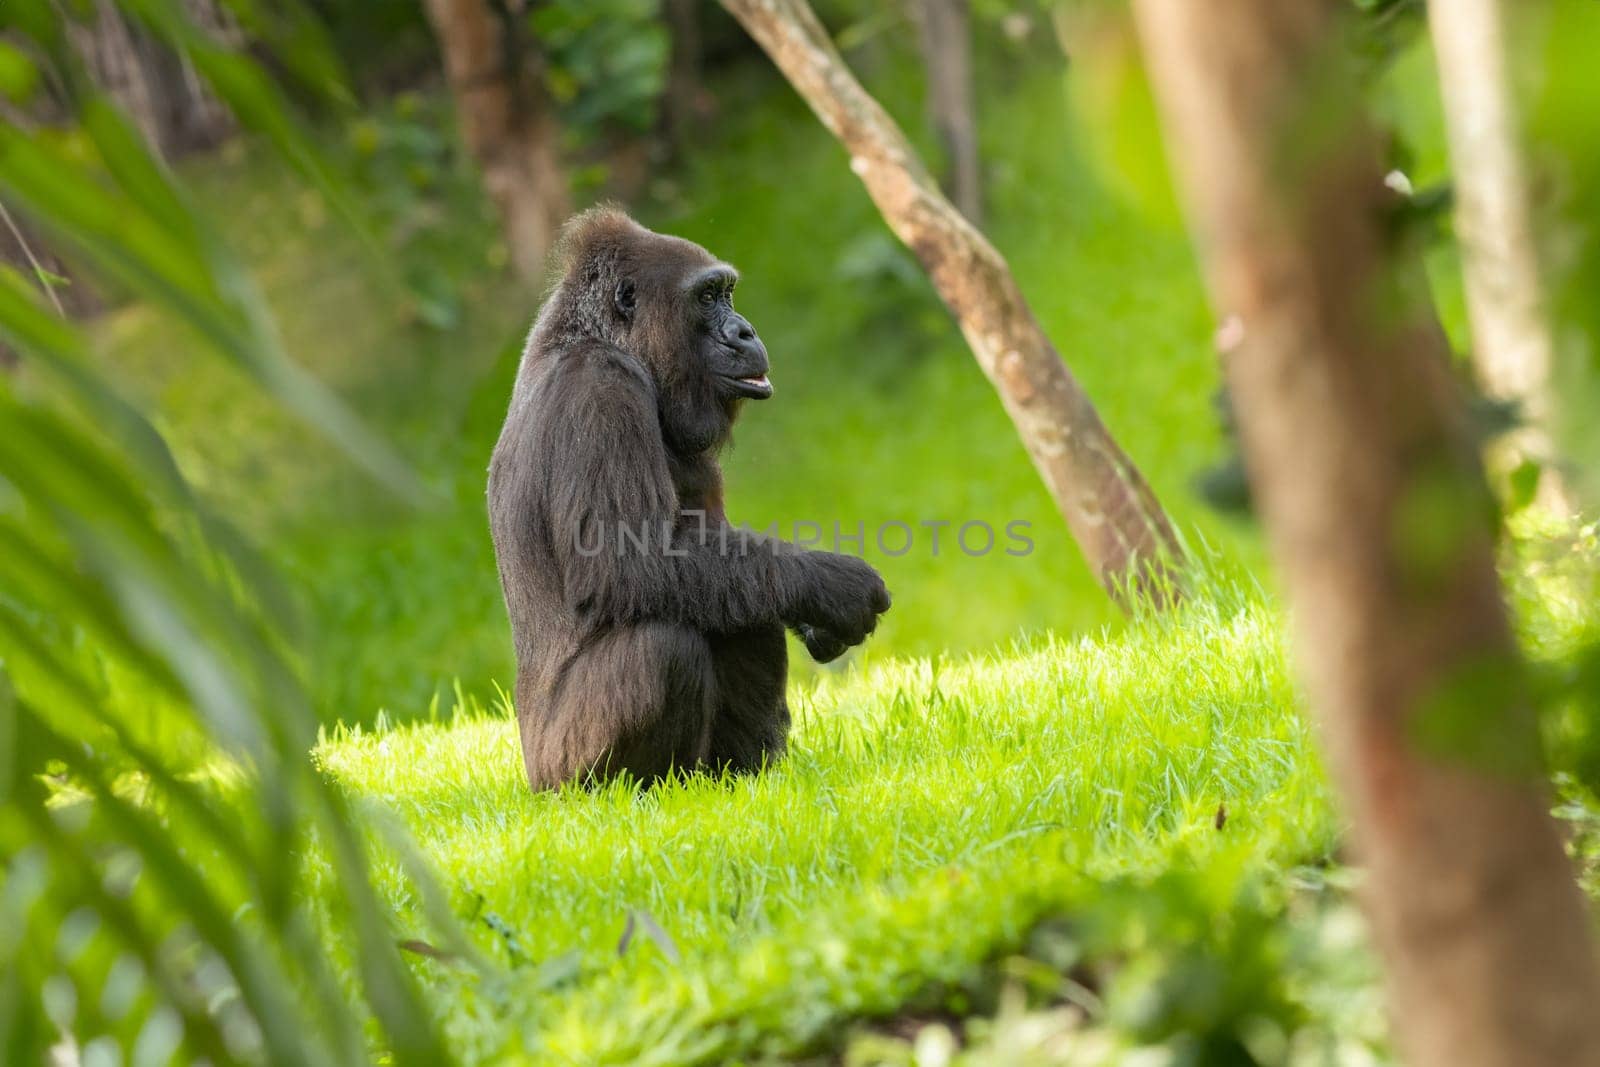 A Majestic Gorilla in Serene Surroundings by Studia72